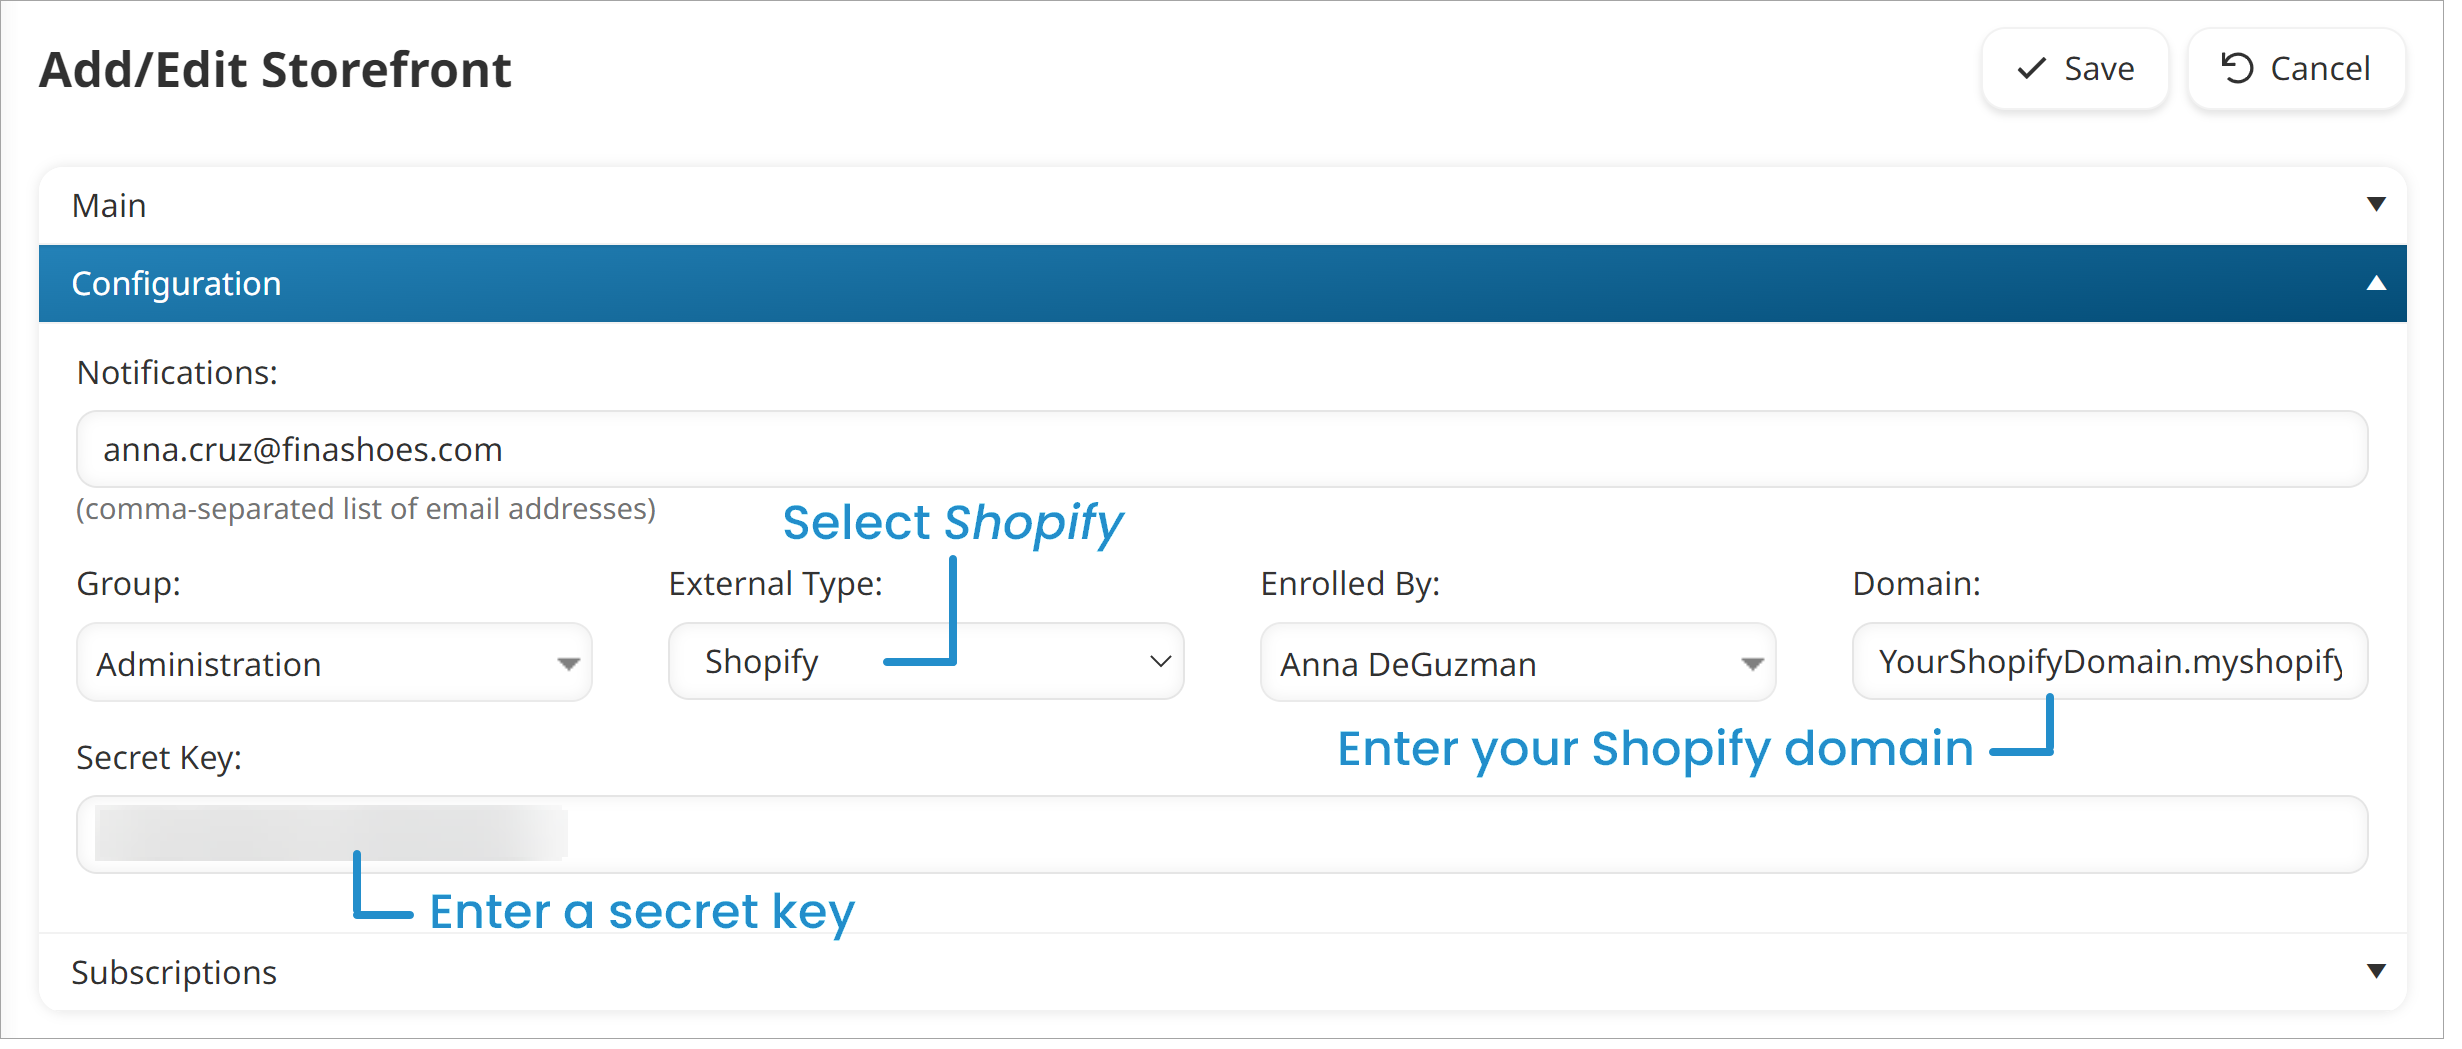 Add Edit Storefront - Configuration - Shopify App 20220420